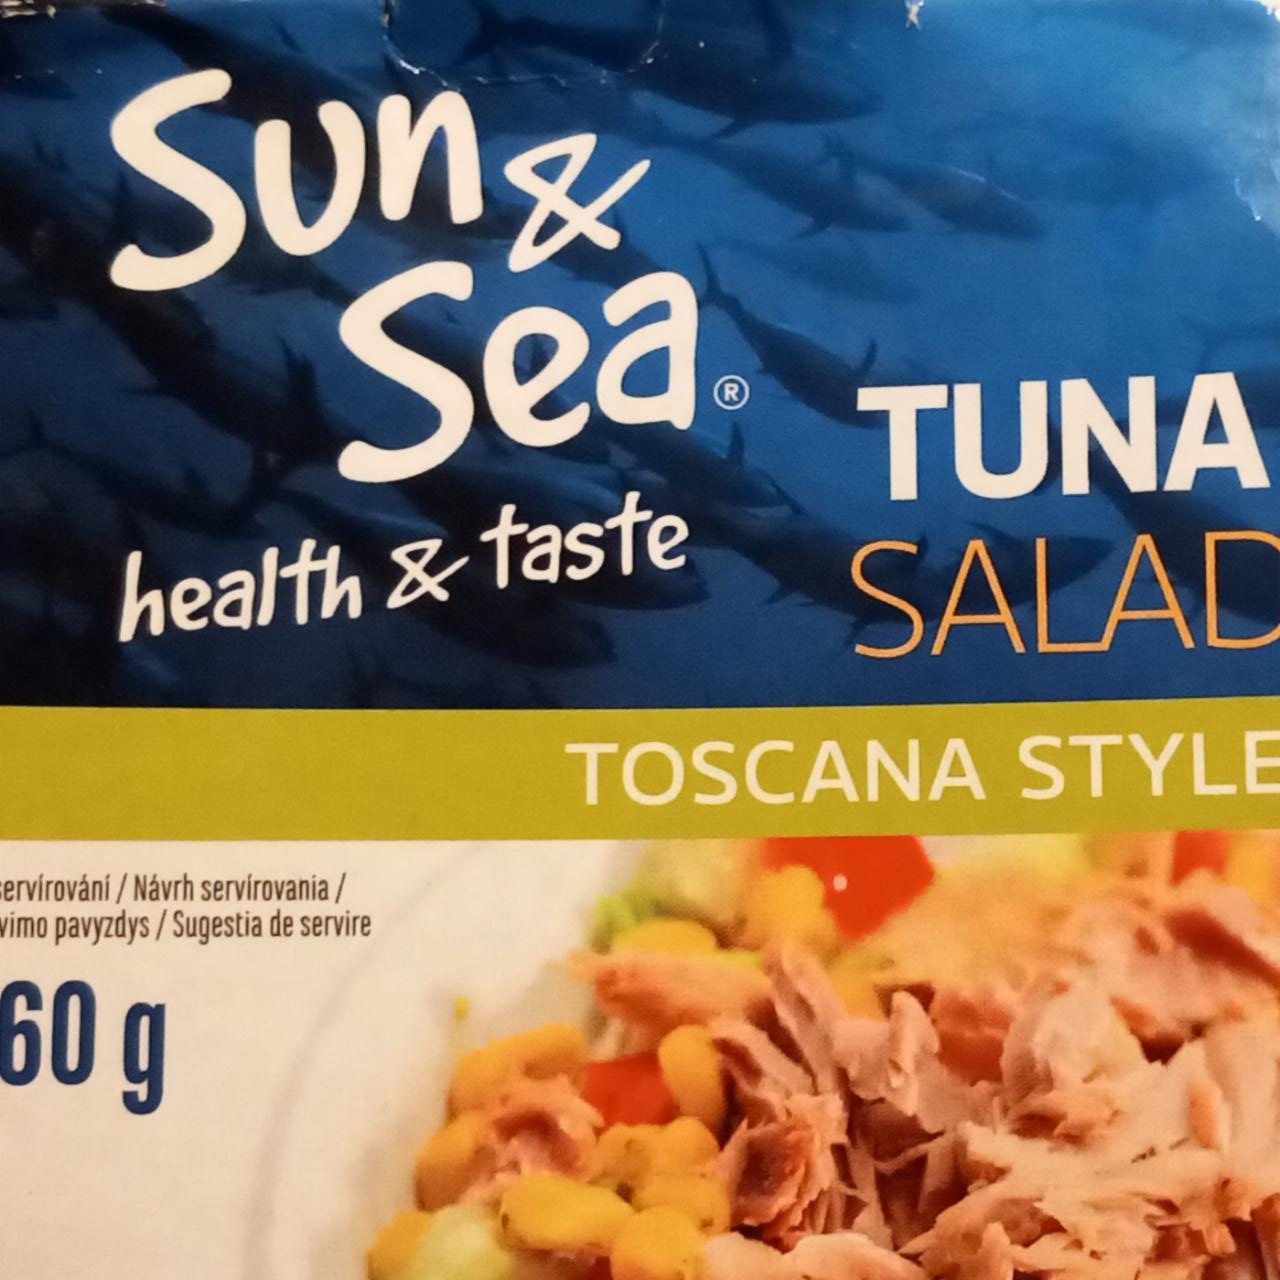 Fotografie - Tuna salad Toscana style Sun & sea